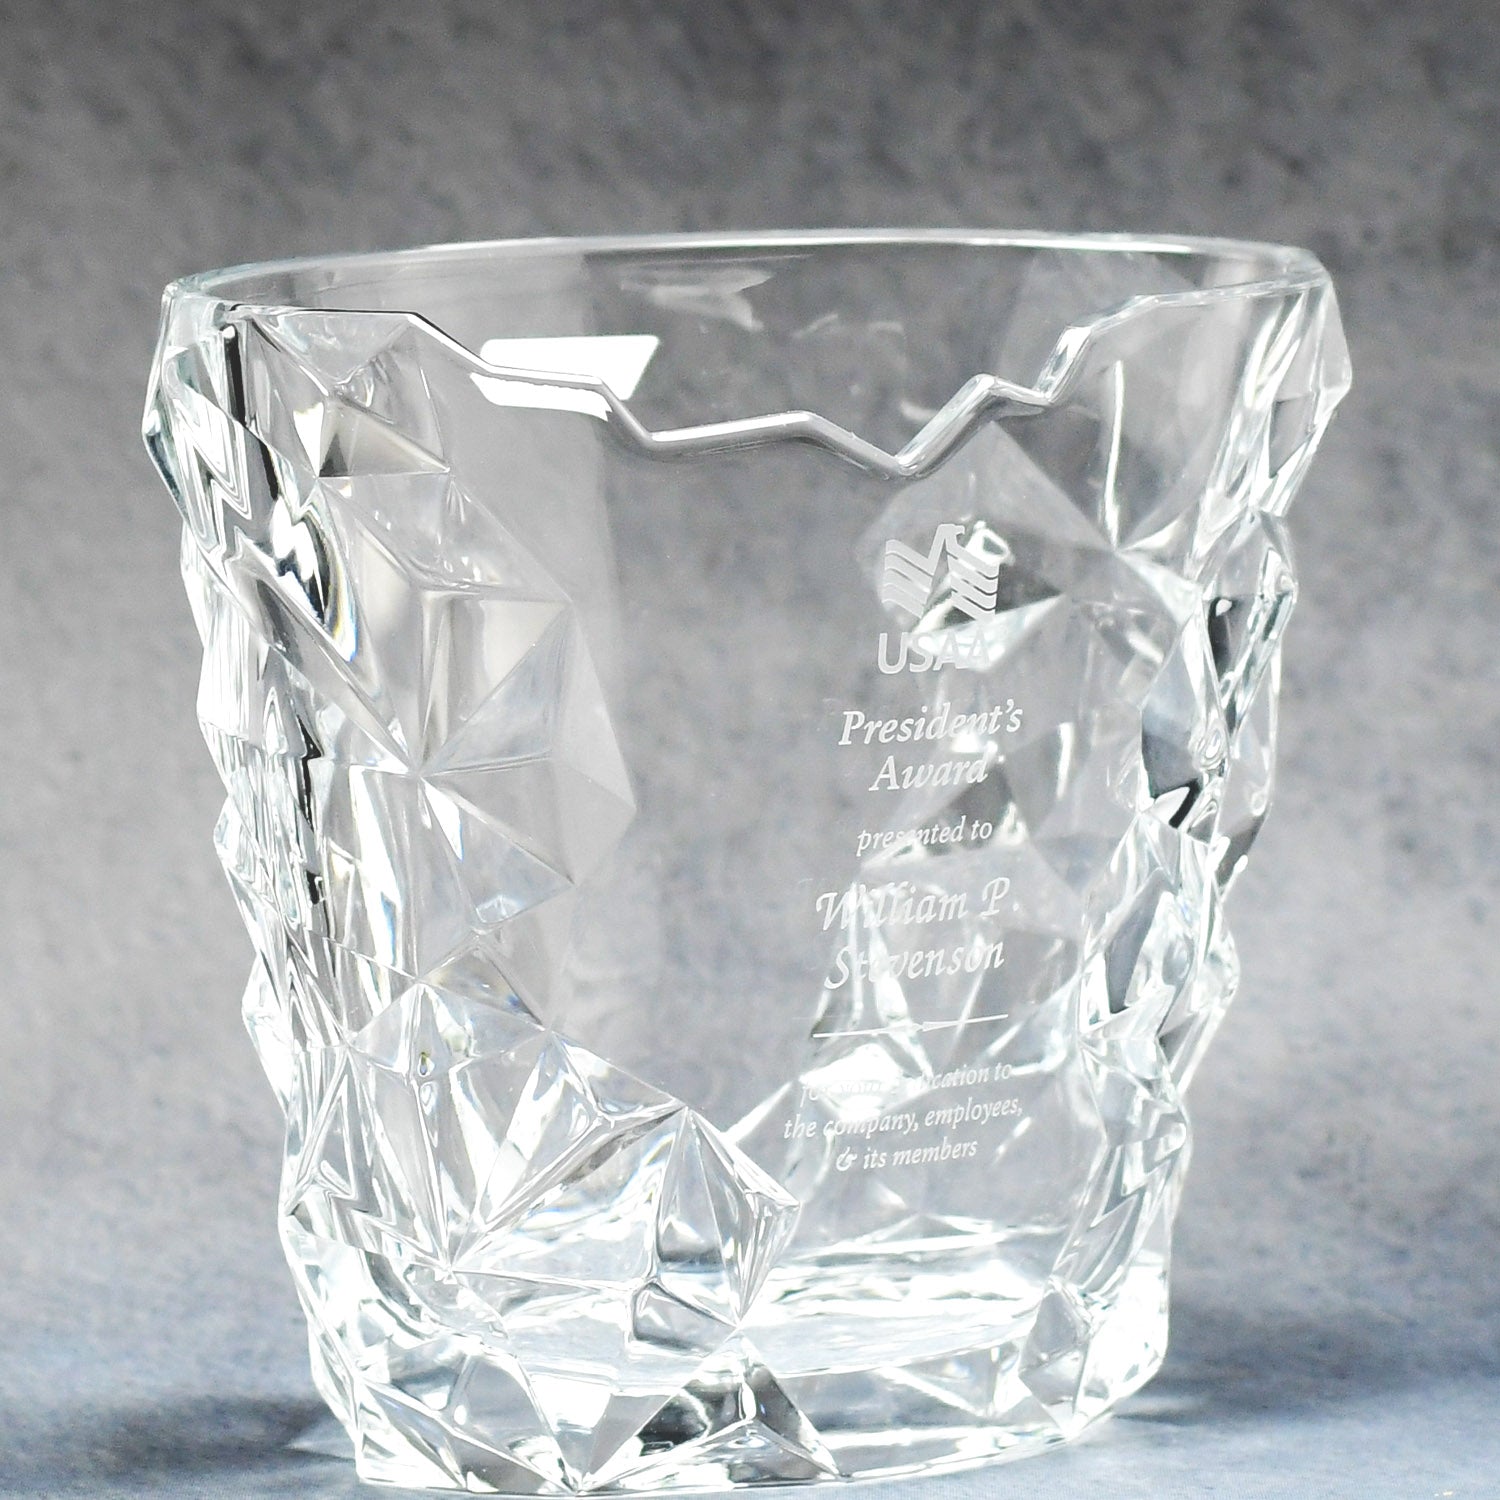 Crystai Iceberg  Vase | Alliance Awards LLC.